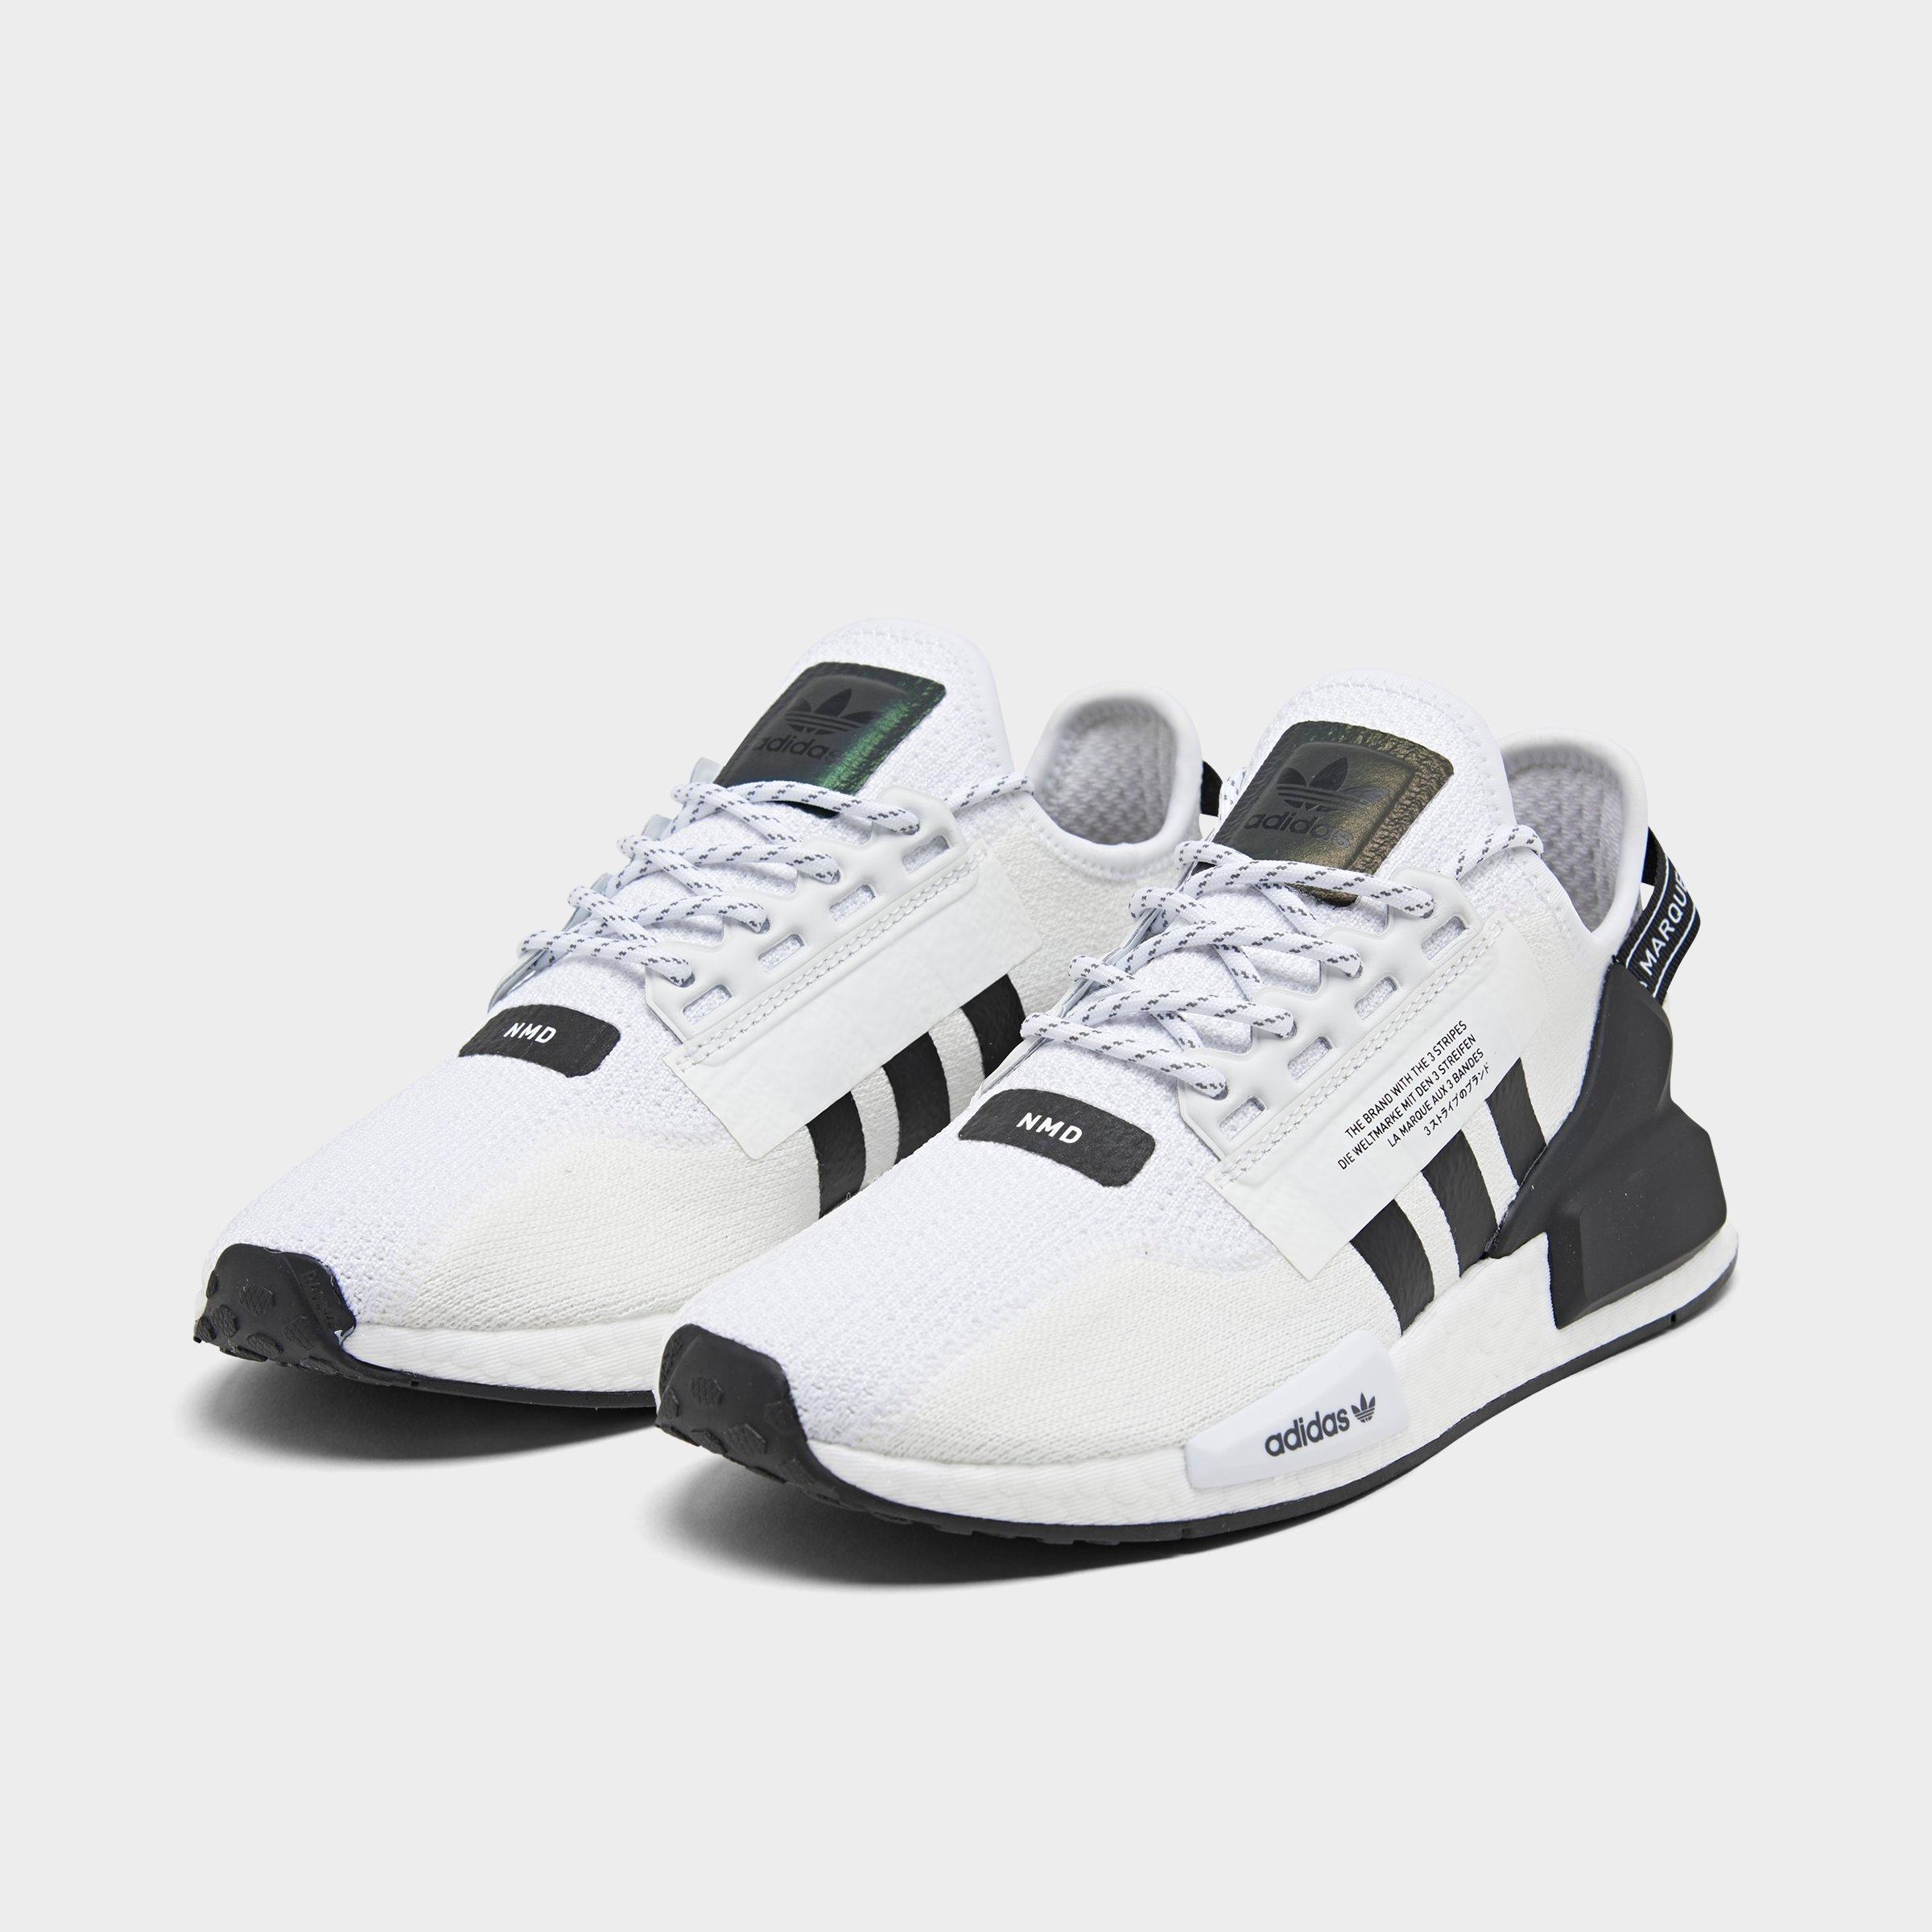 adidas NMD R1 PK White Gum Under Retail Sneaker Shouts